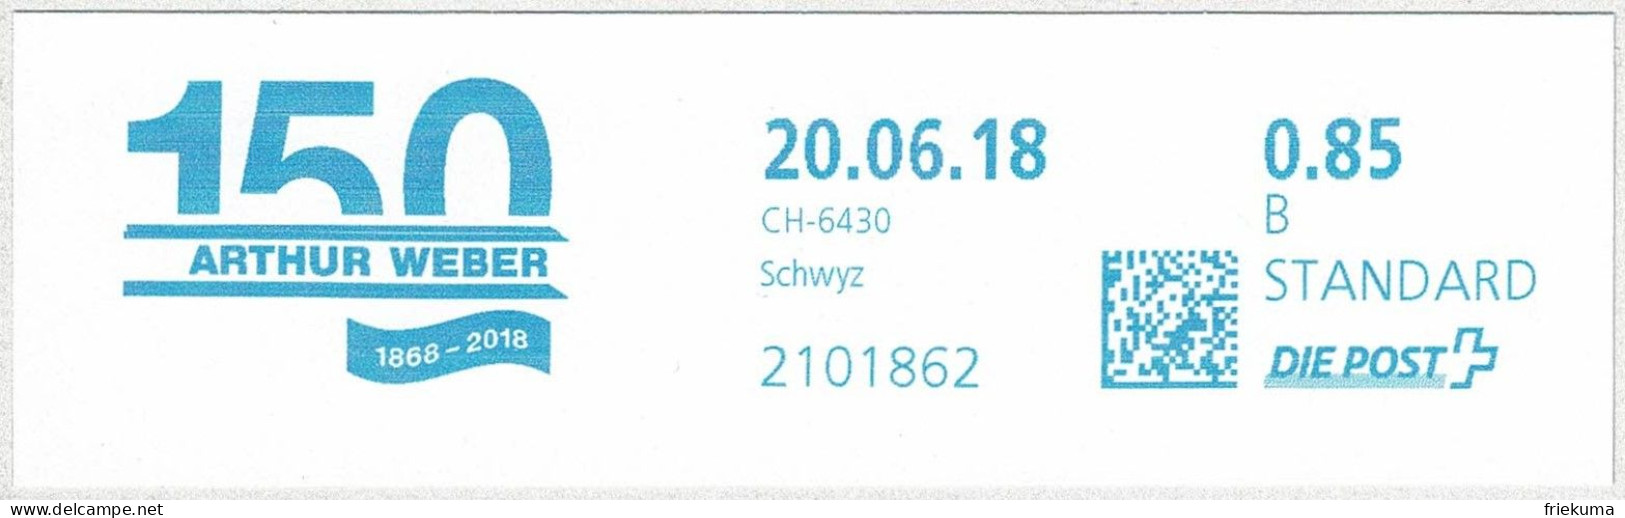 Schweiz / Helvetia 2018, Freistempel / EMA / Meterstamp Arthur Weber Schwyz, Handwerkerzentrum - Frankeermachinen